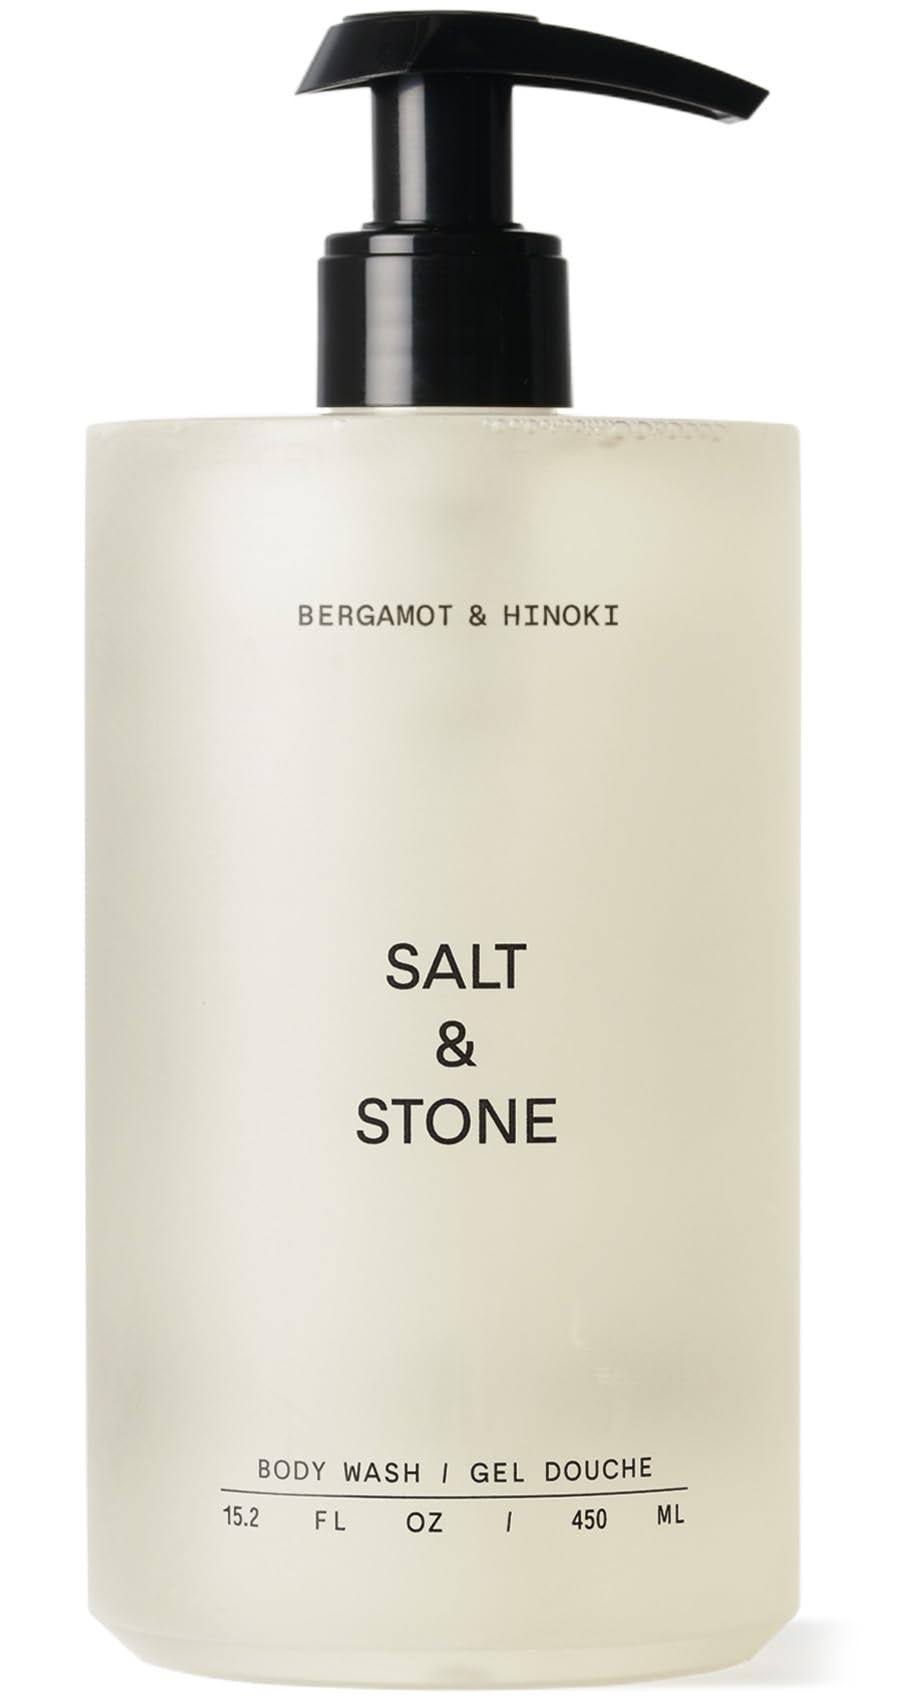 Salt & Stone Antioxidant Bergamot & Hinoki Body Wash 450ml